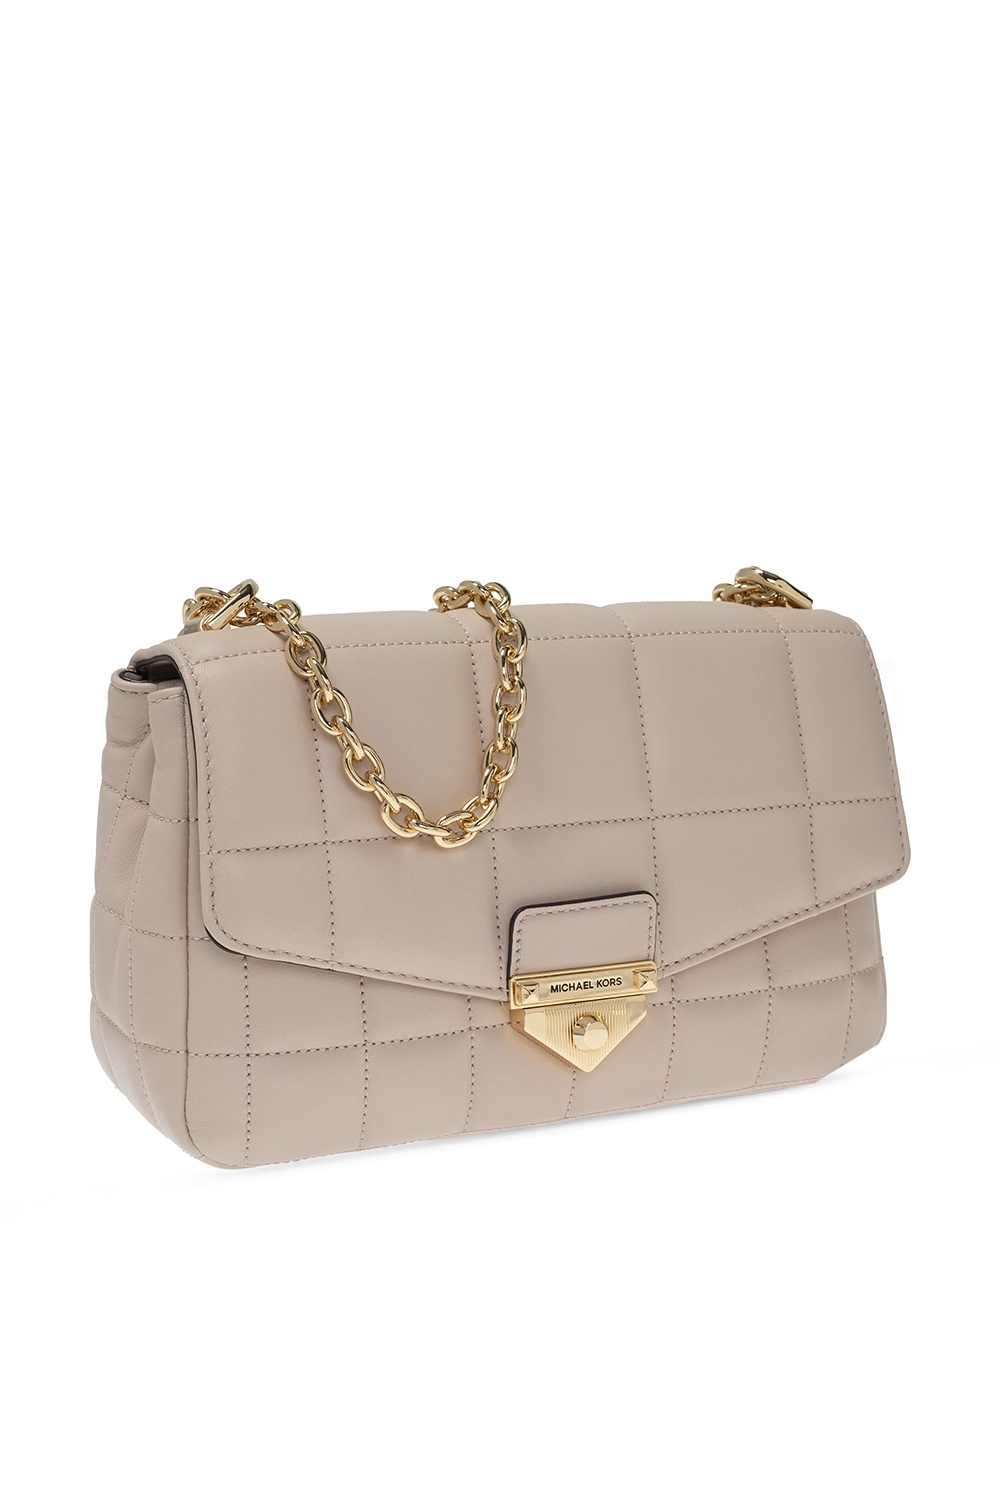 IetpShops | Michael Michael Kors 'Soho' shoulder bag | Chanel Pre-Owned  Denim Basket Chain Shoulder Bag | Women's Bags